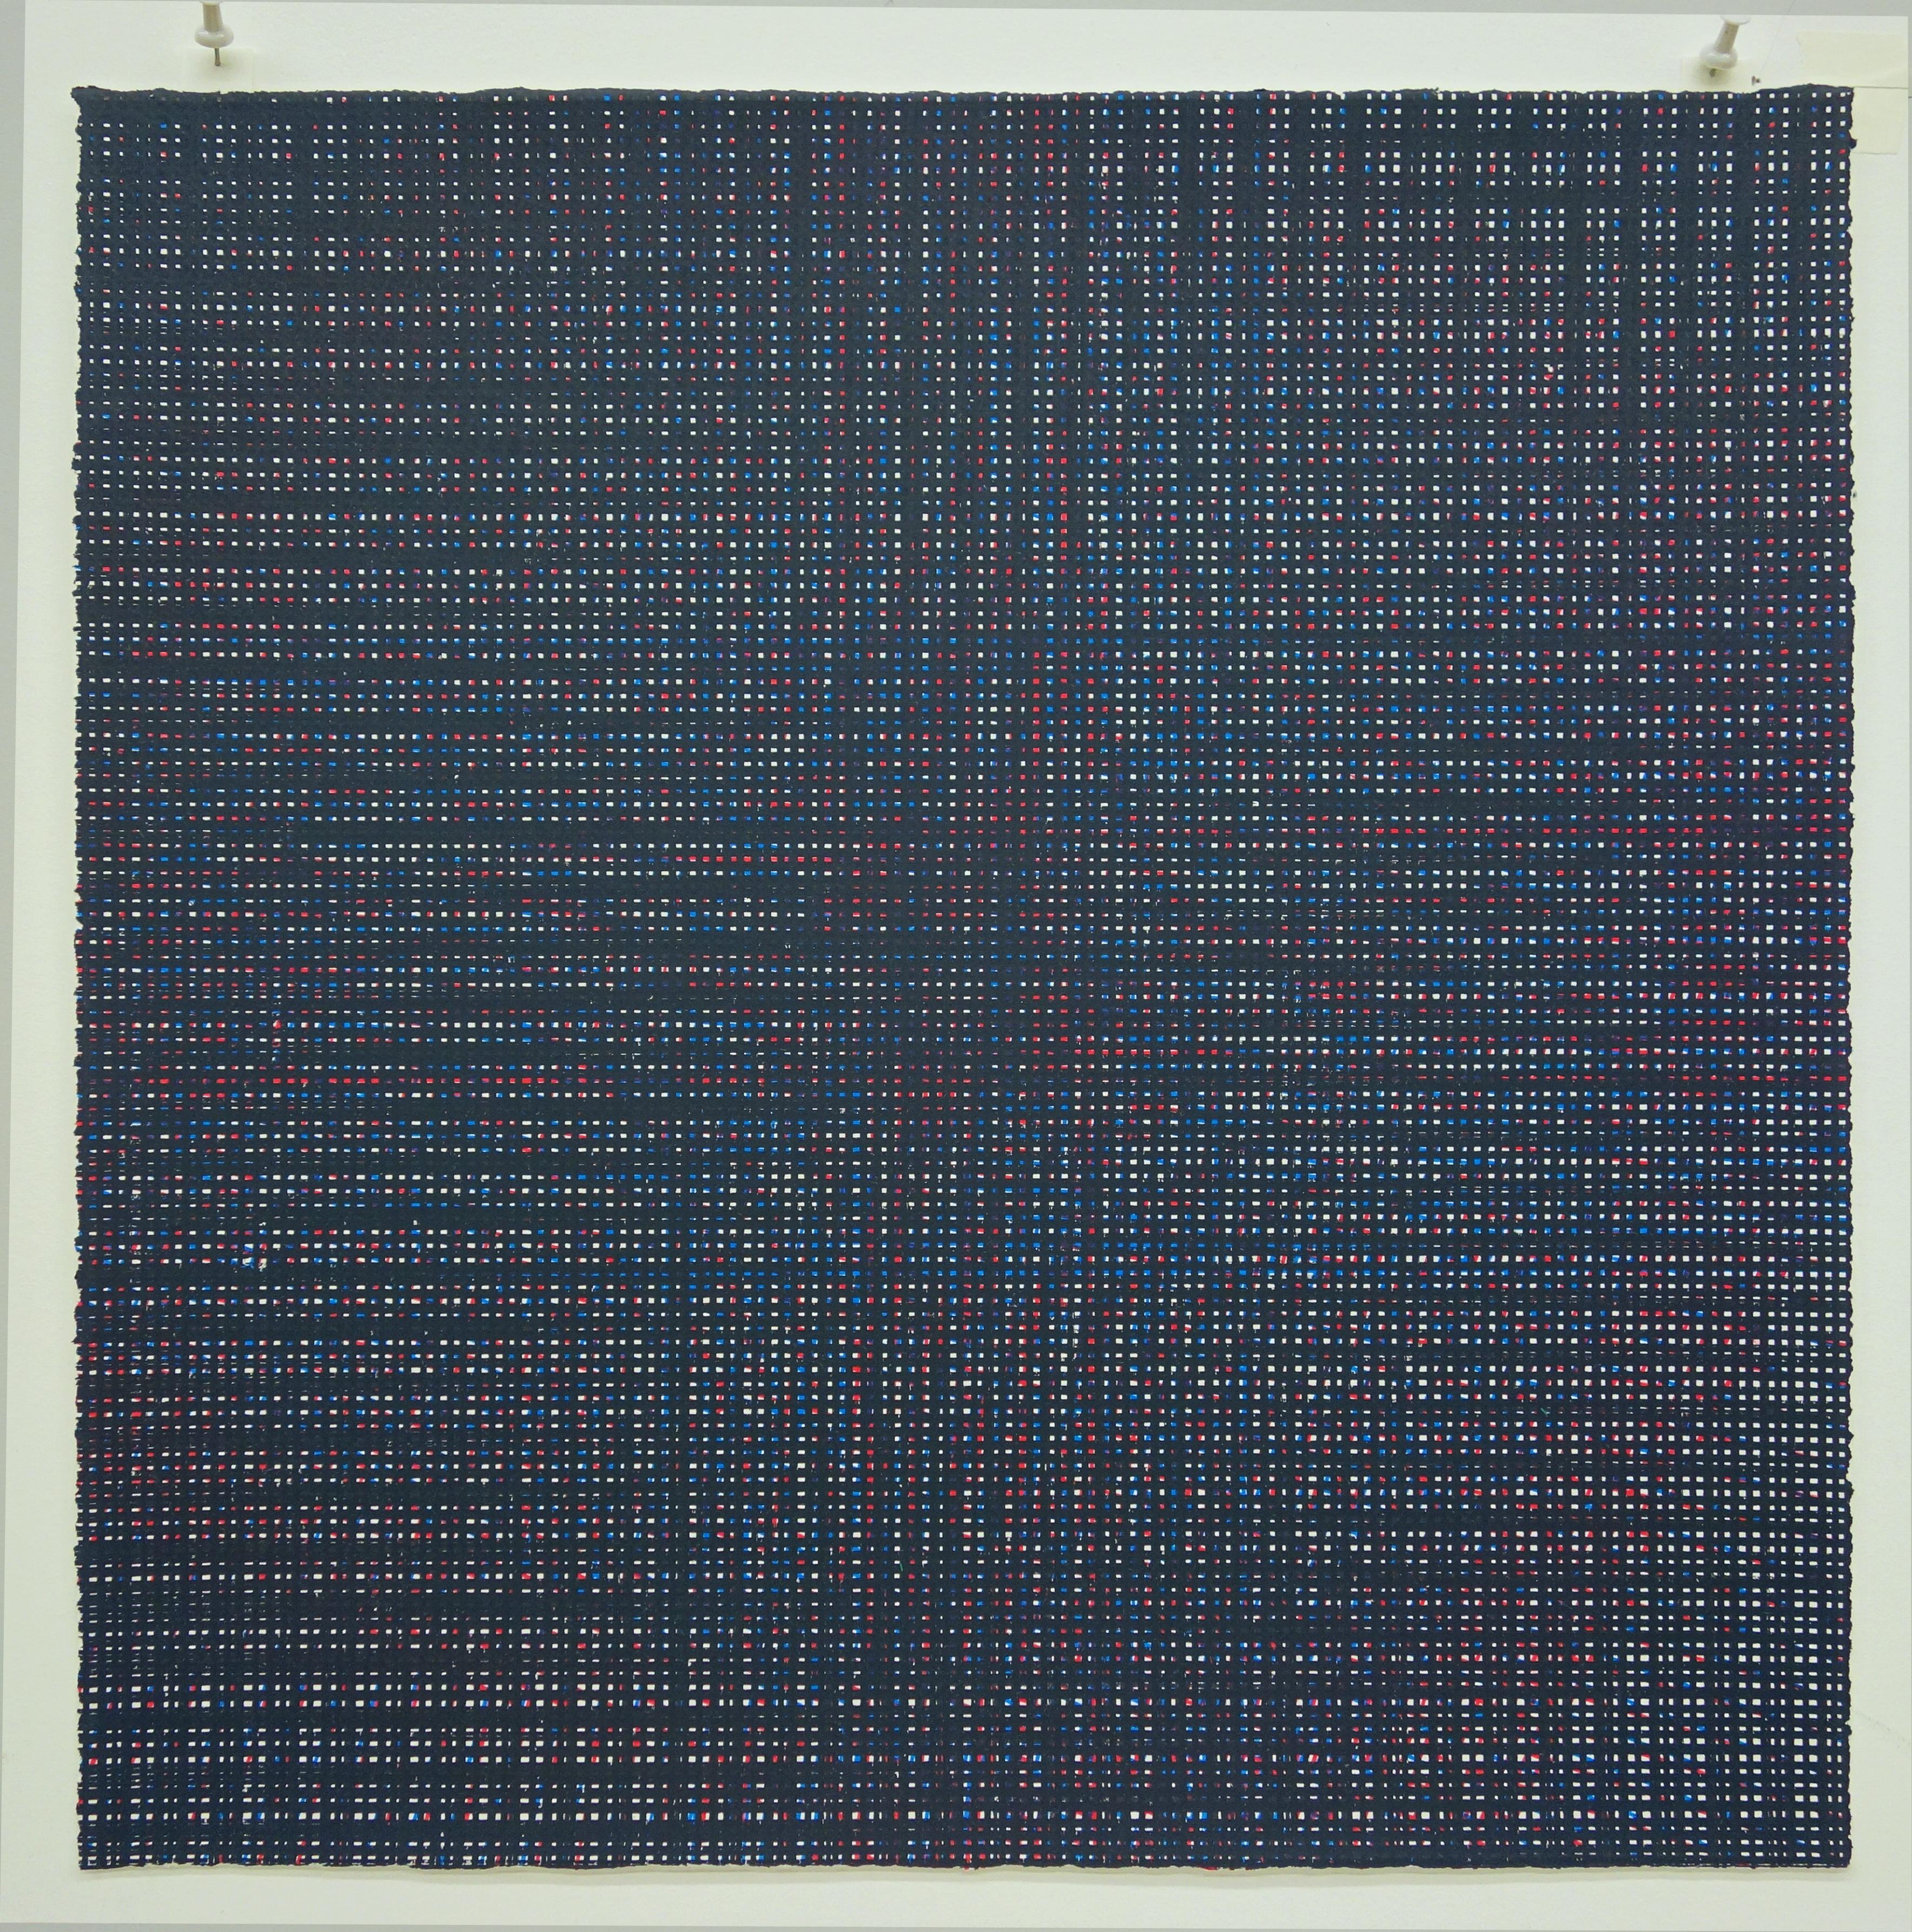 Rob de Oude, Untitled-Wassaic 2, 2016, silkscreen, 18 x 18 inches, Suite of 10 2